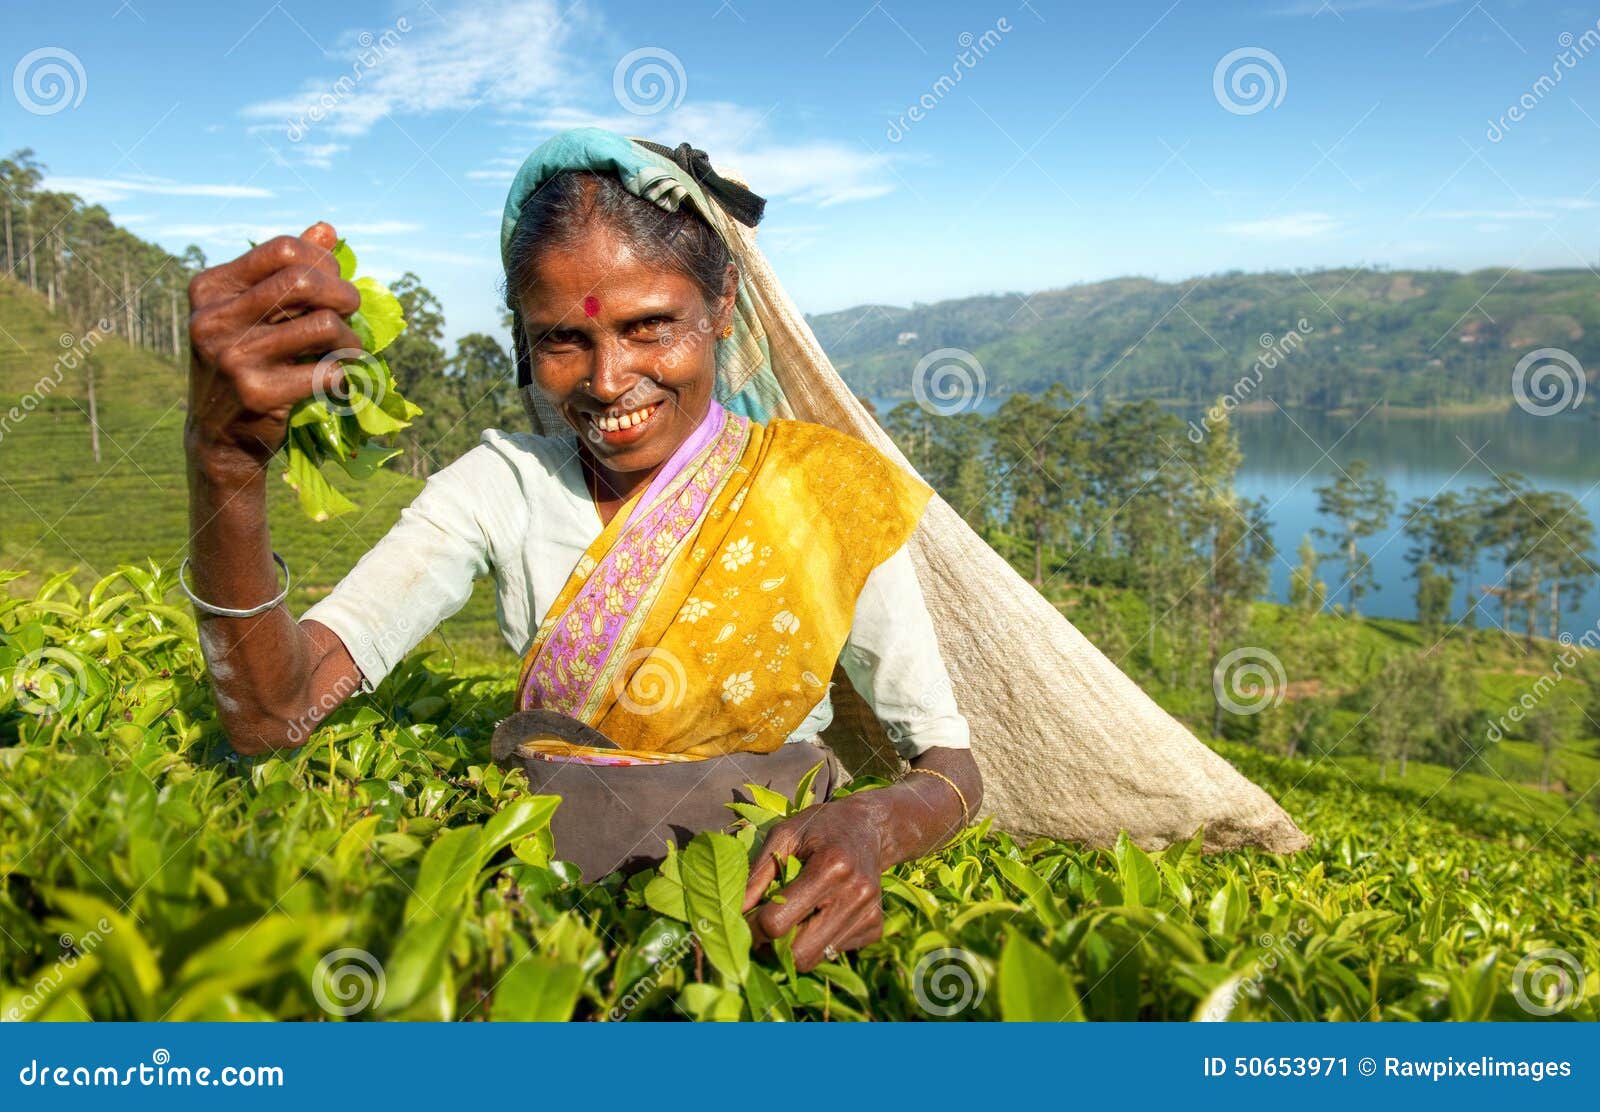 indigenous sri lankan tea picker concept